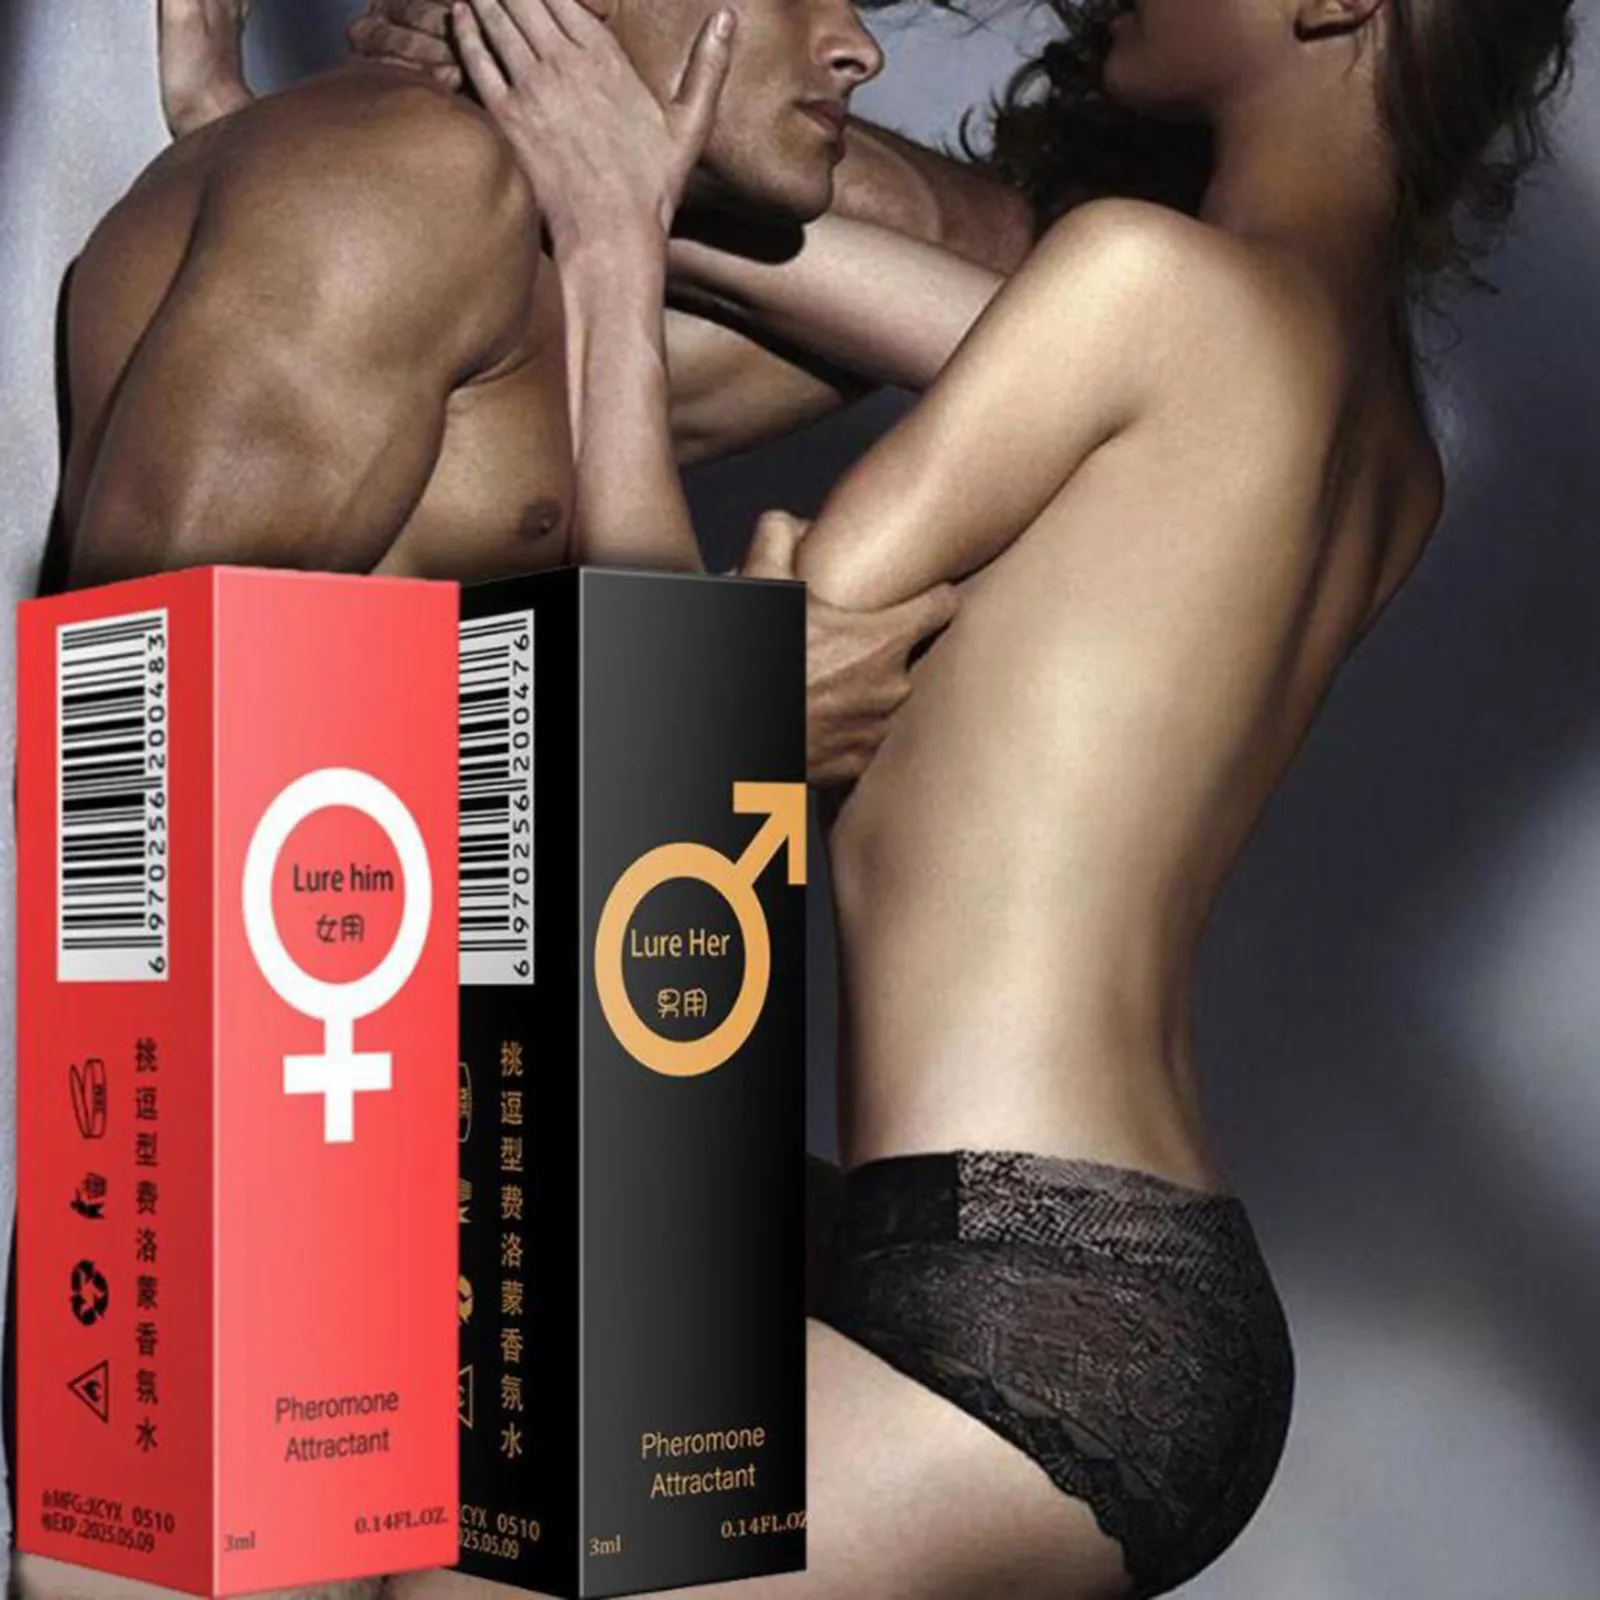 

3ml Pheromone Sex Attractant Perfume Flirt Fragrance Scented For Him Her